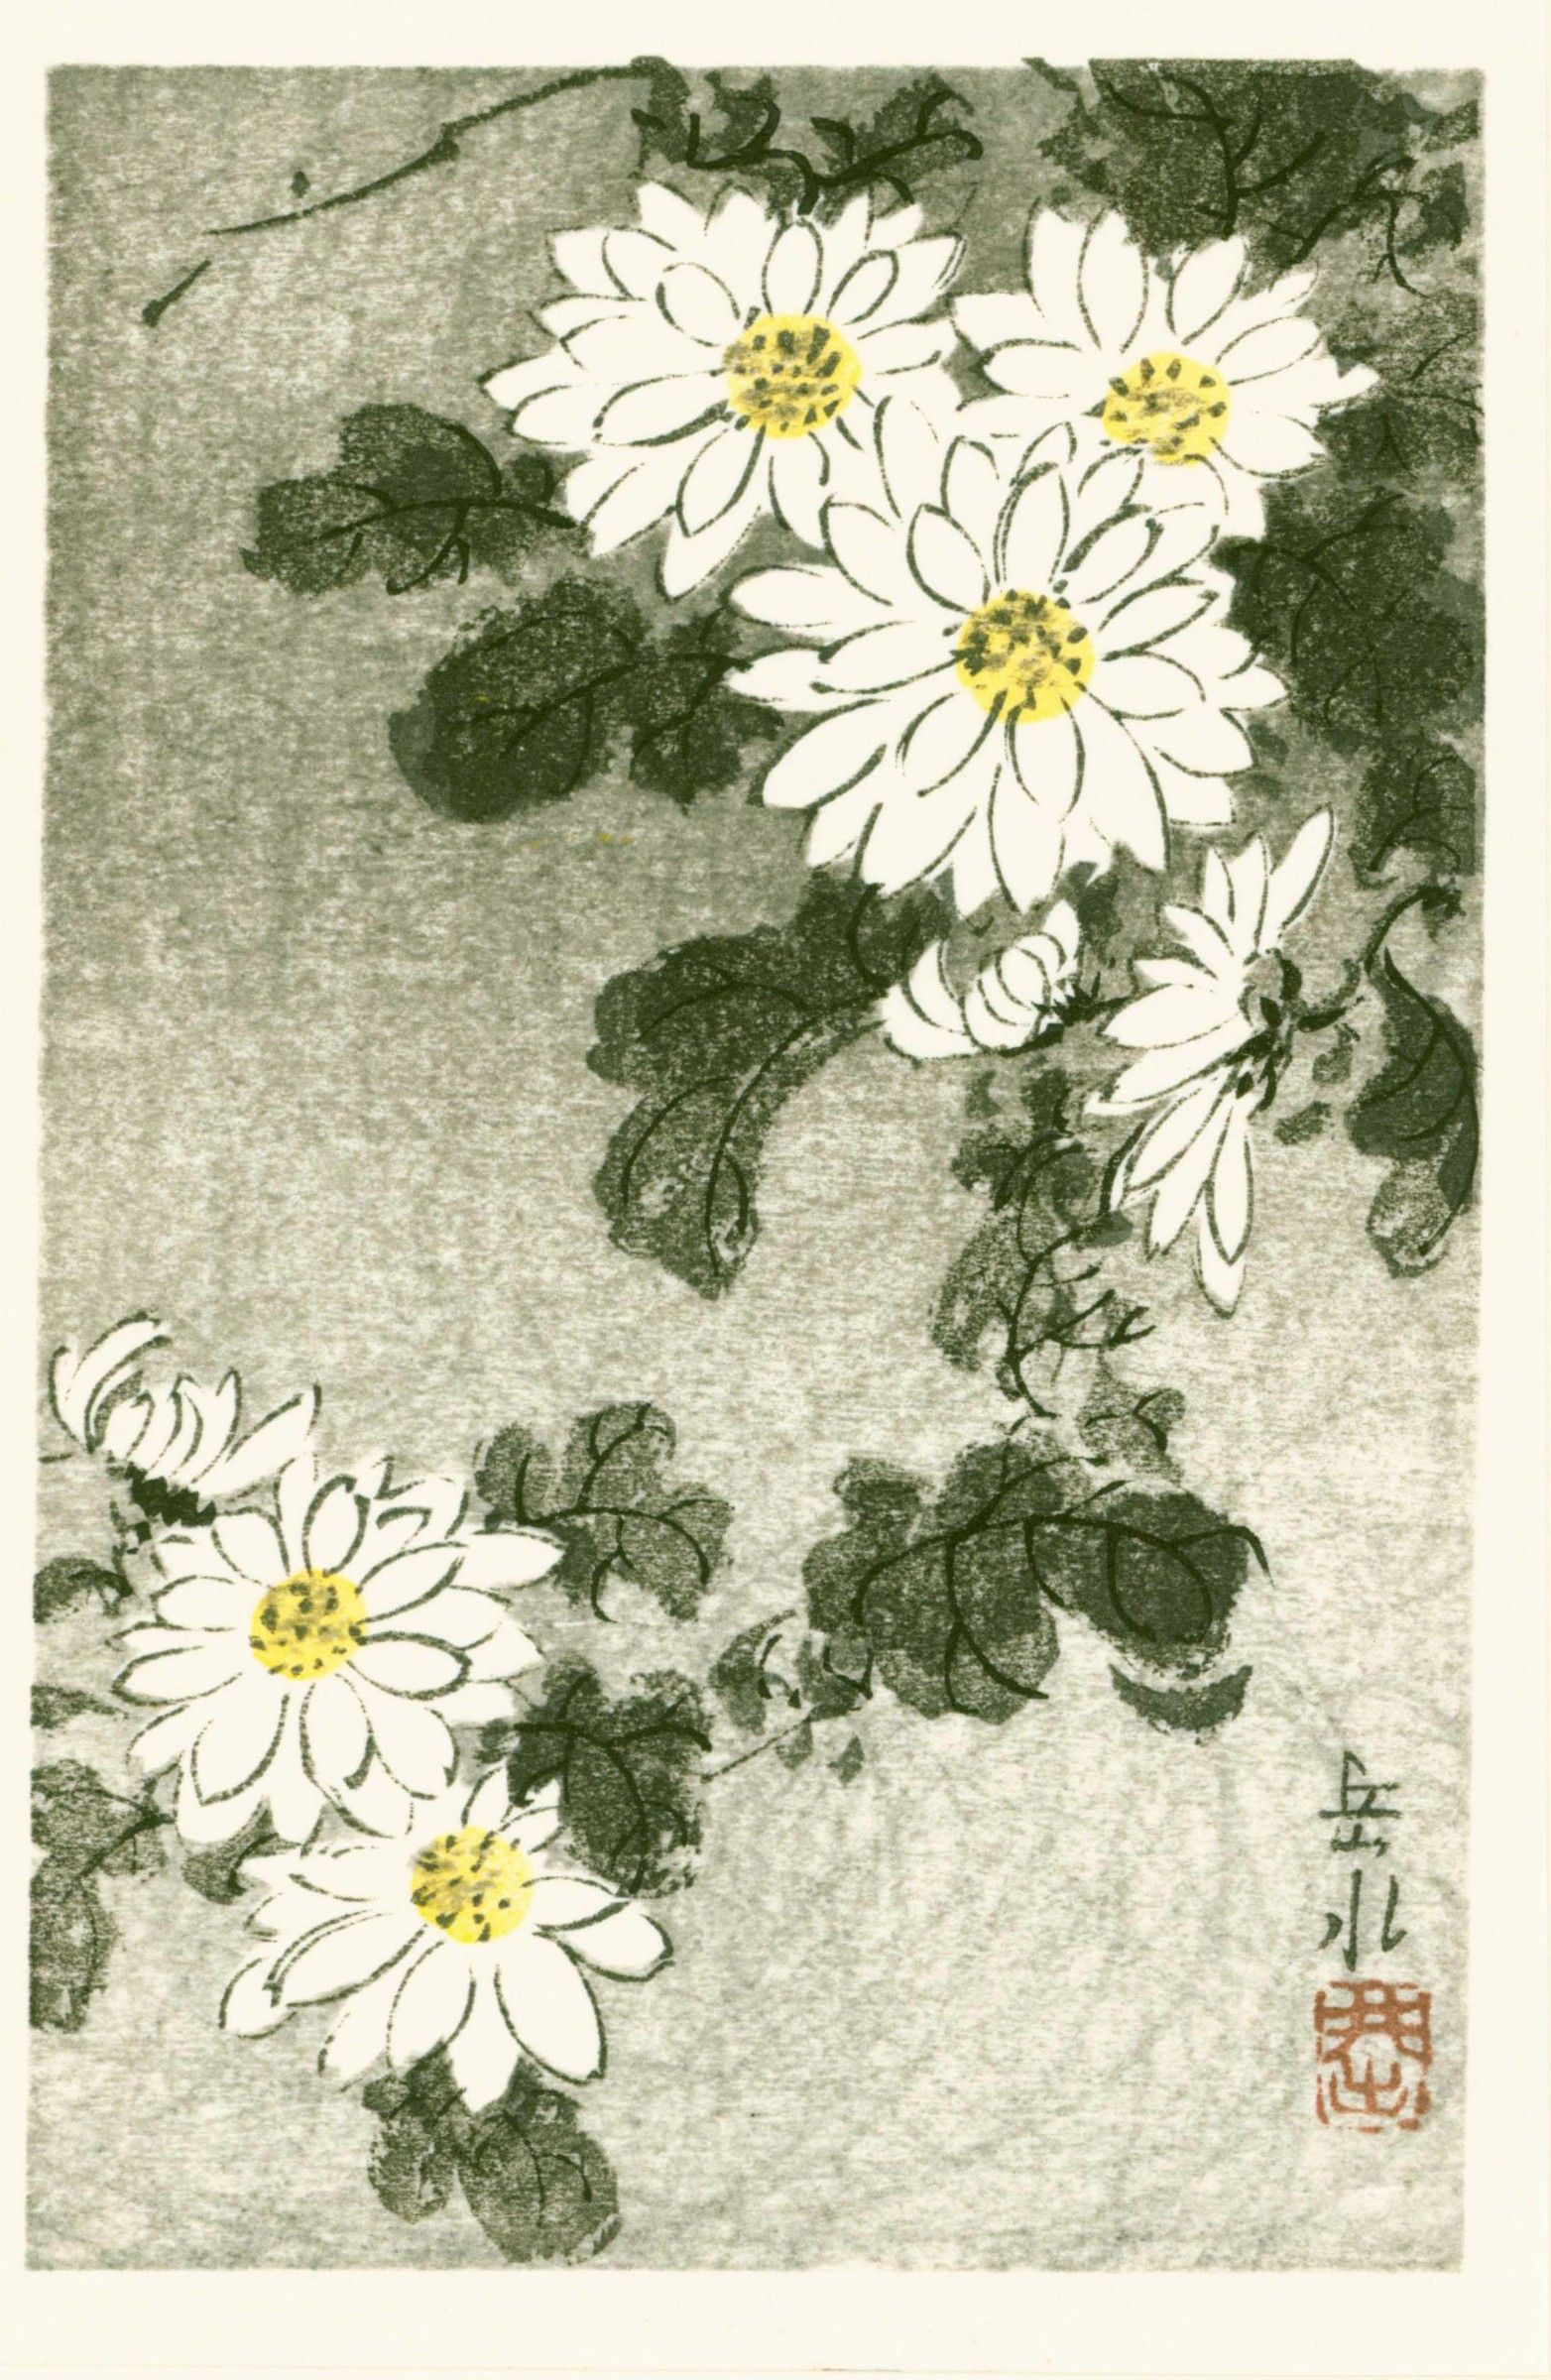 Ide Gakusui Japanese Woodblock Print - Chrysanthemums